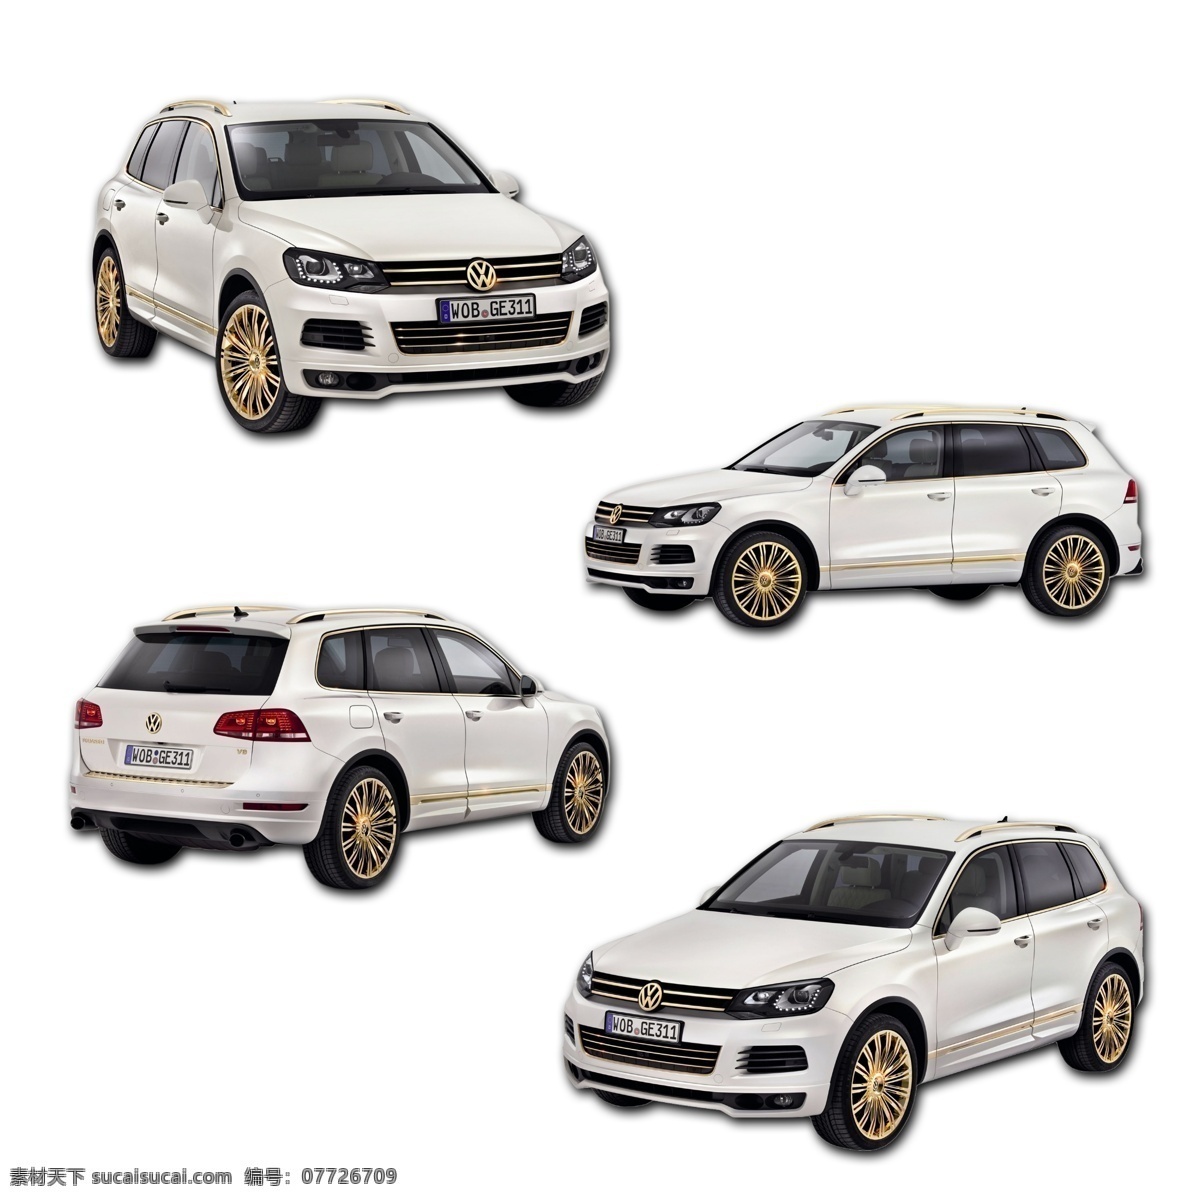 2011 大众 途 锐 黄金 版 2011款 volkswagen touareg gold edition 白色汽车 汽车 分层 源文件